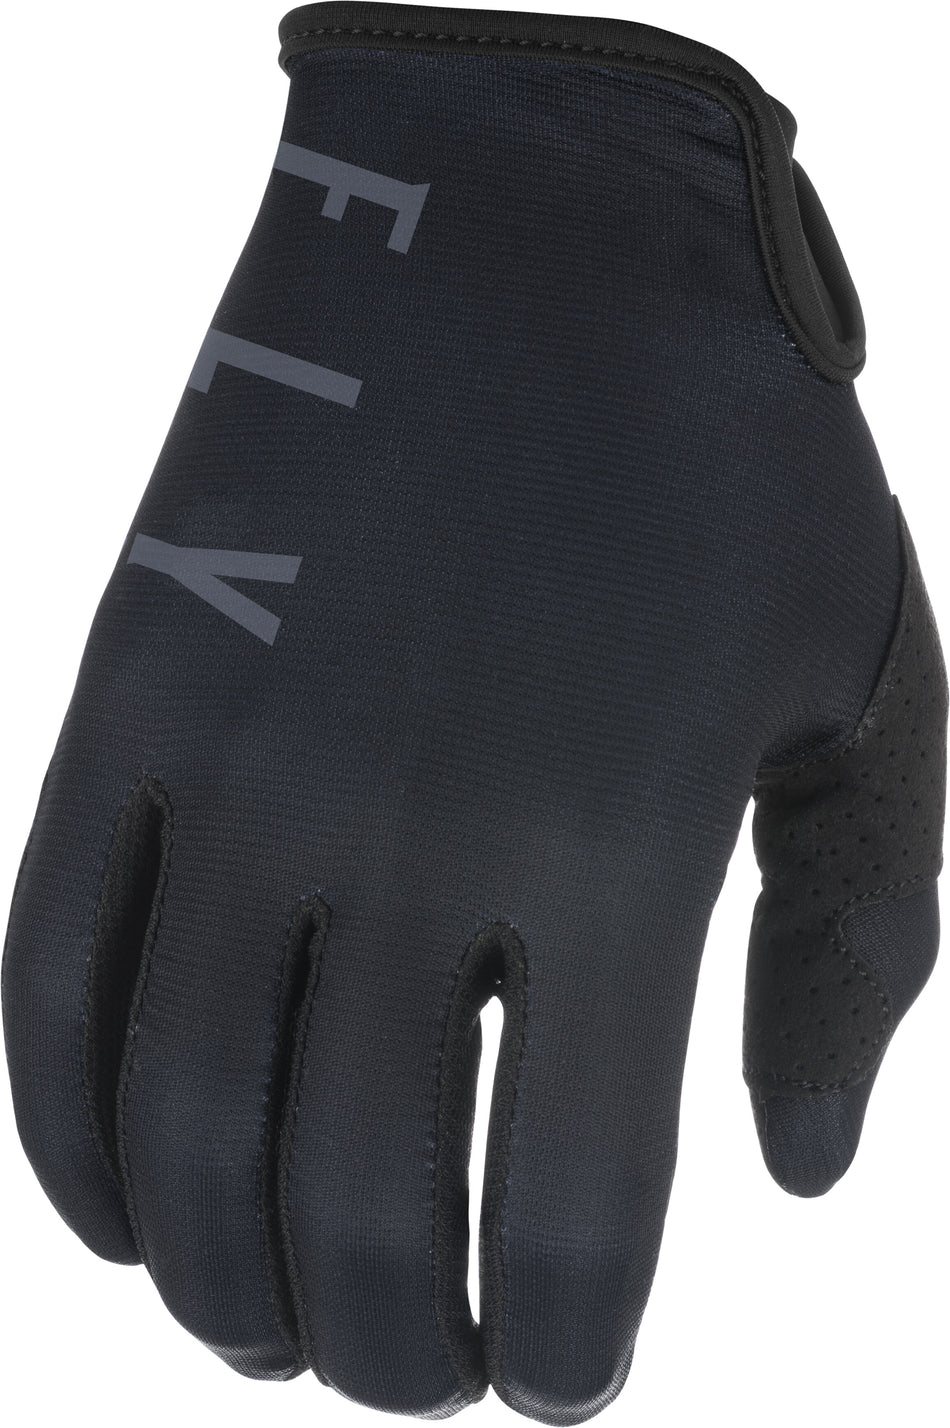 FLY RACING Lite Gloves Black/Grey Sz 09 374-71009